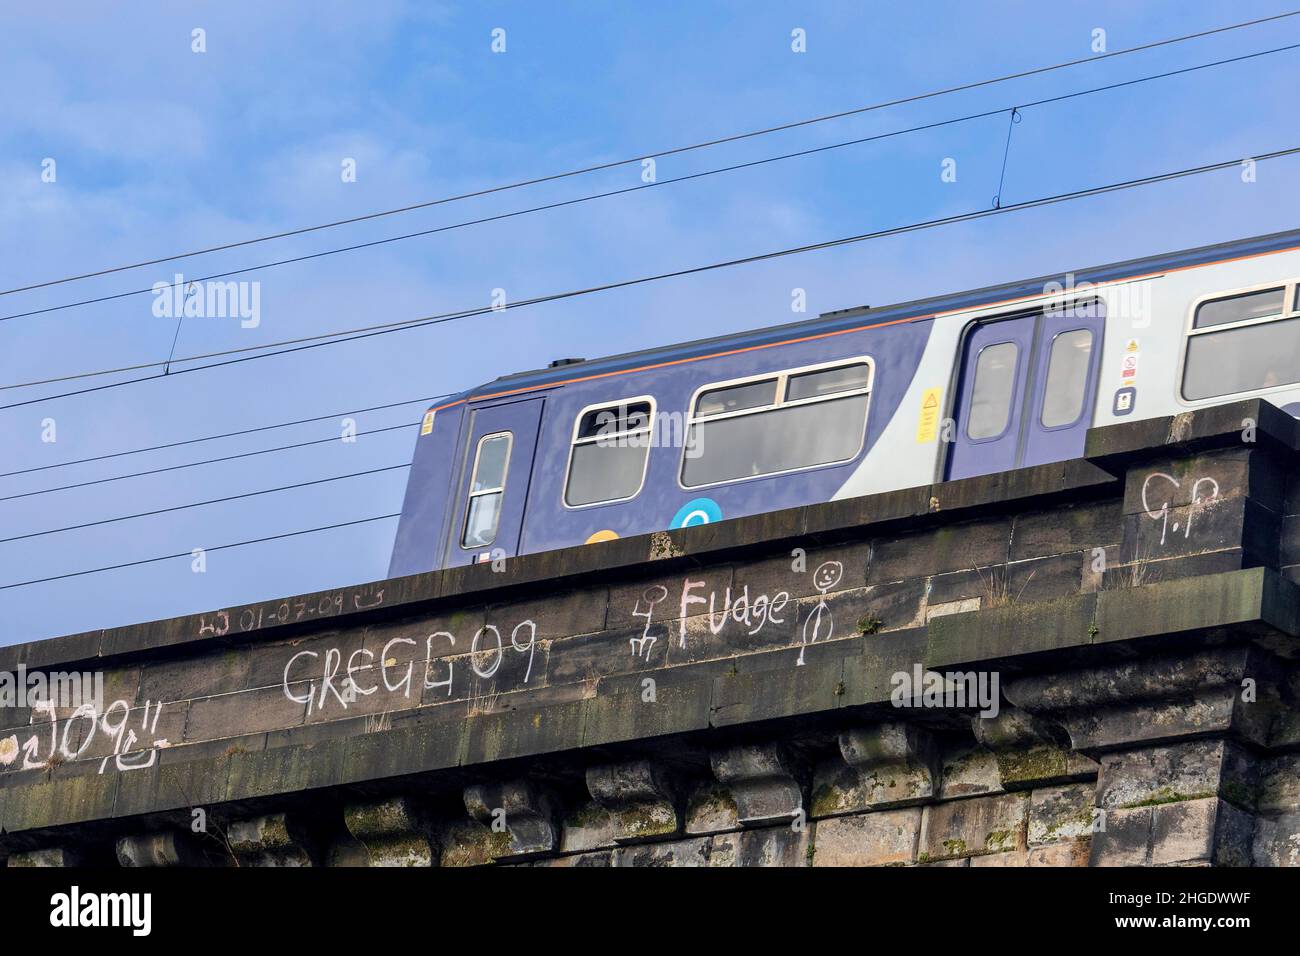 Garffiti on railway viaduct. Commuter train. Stock Photo